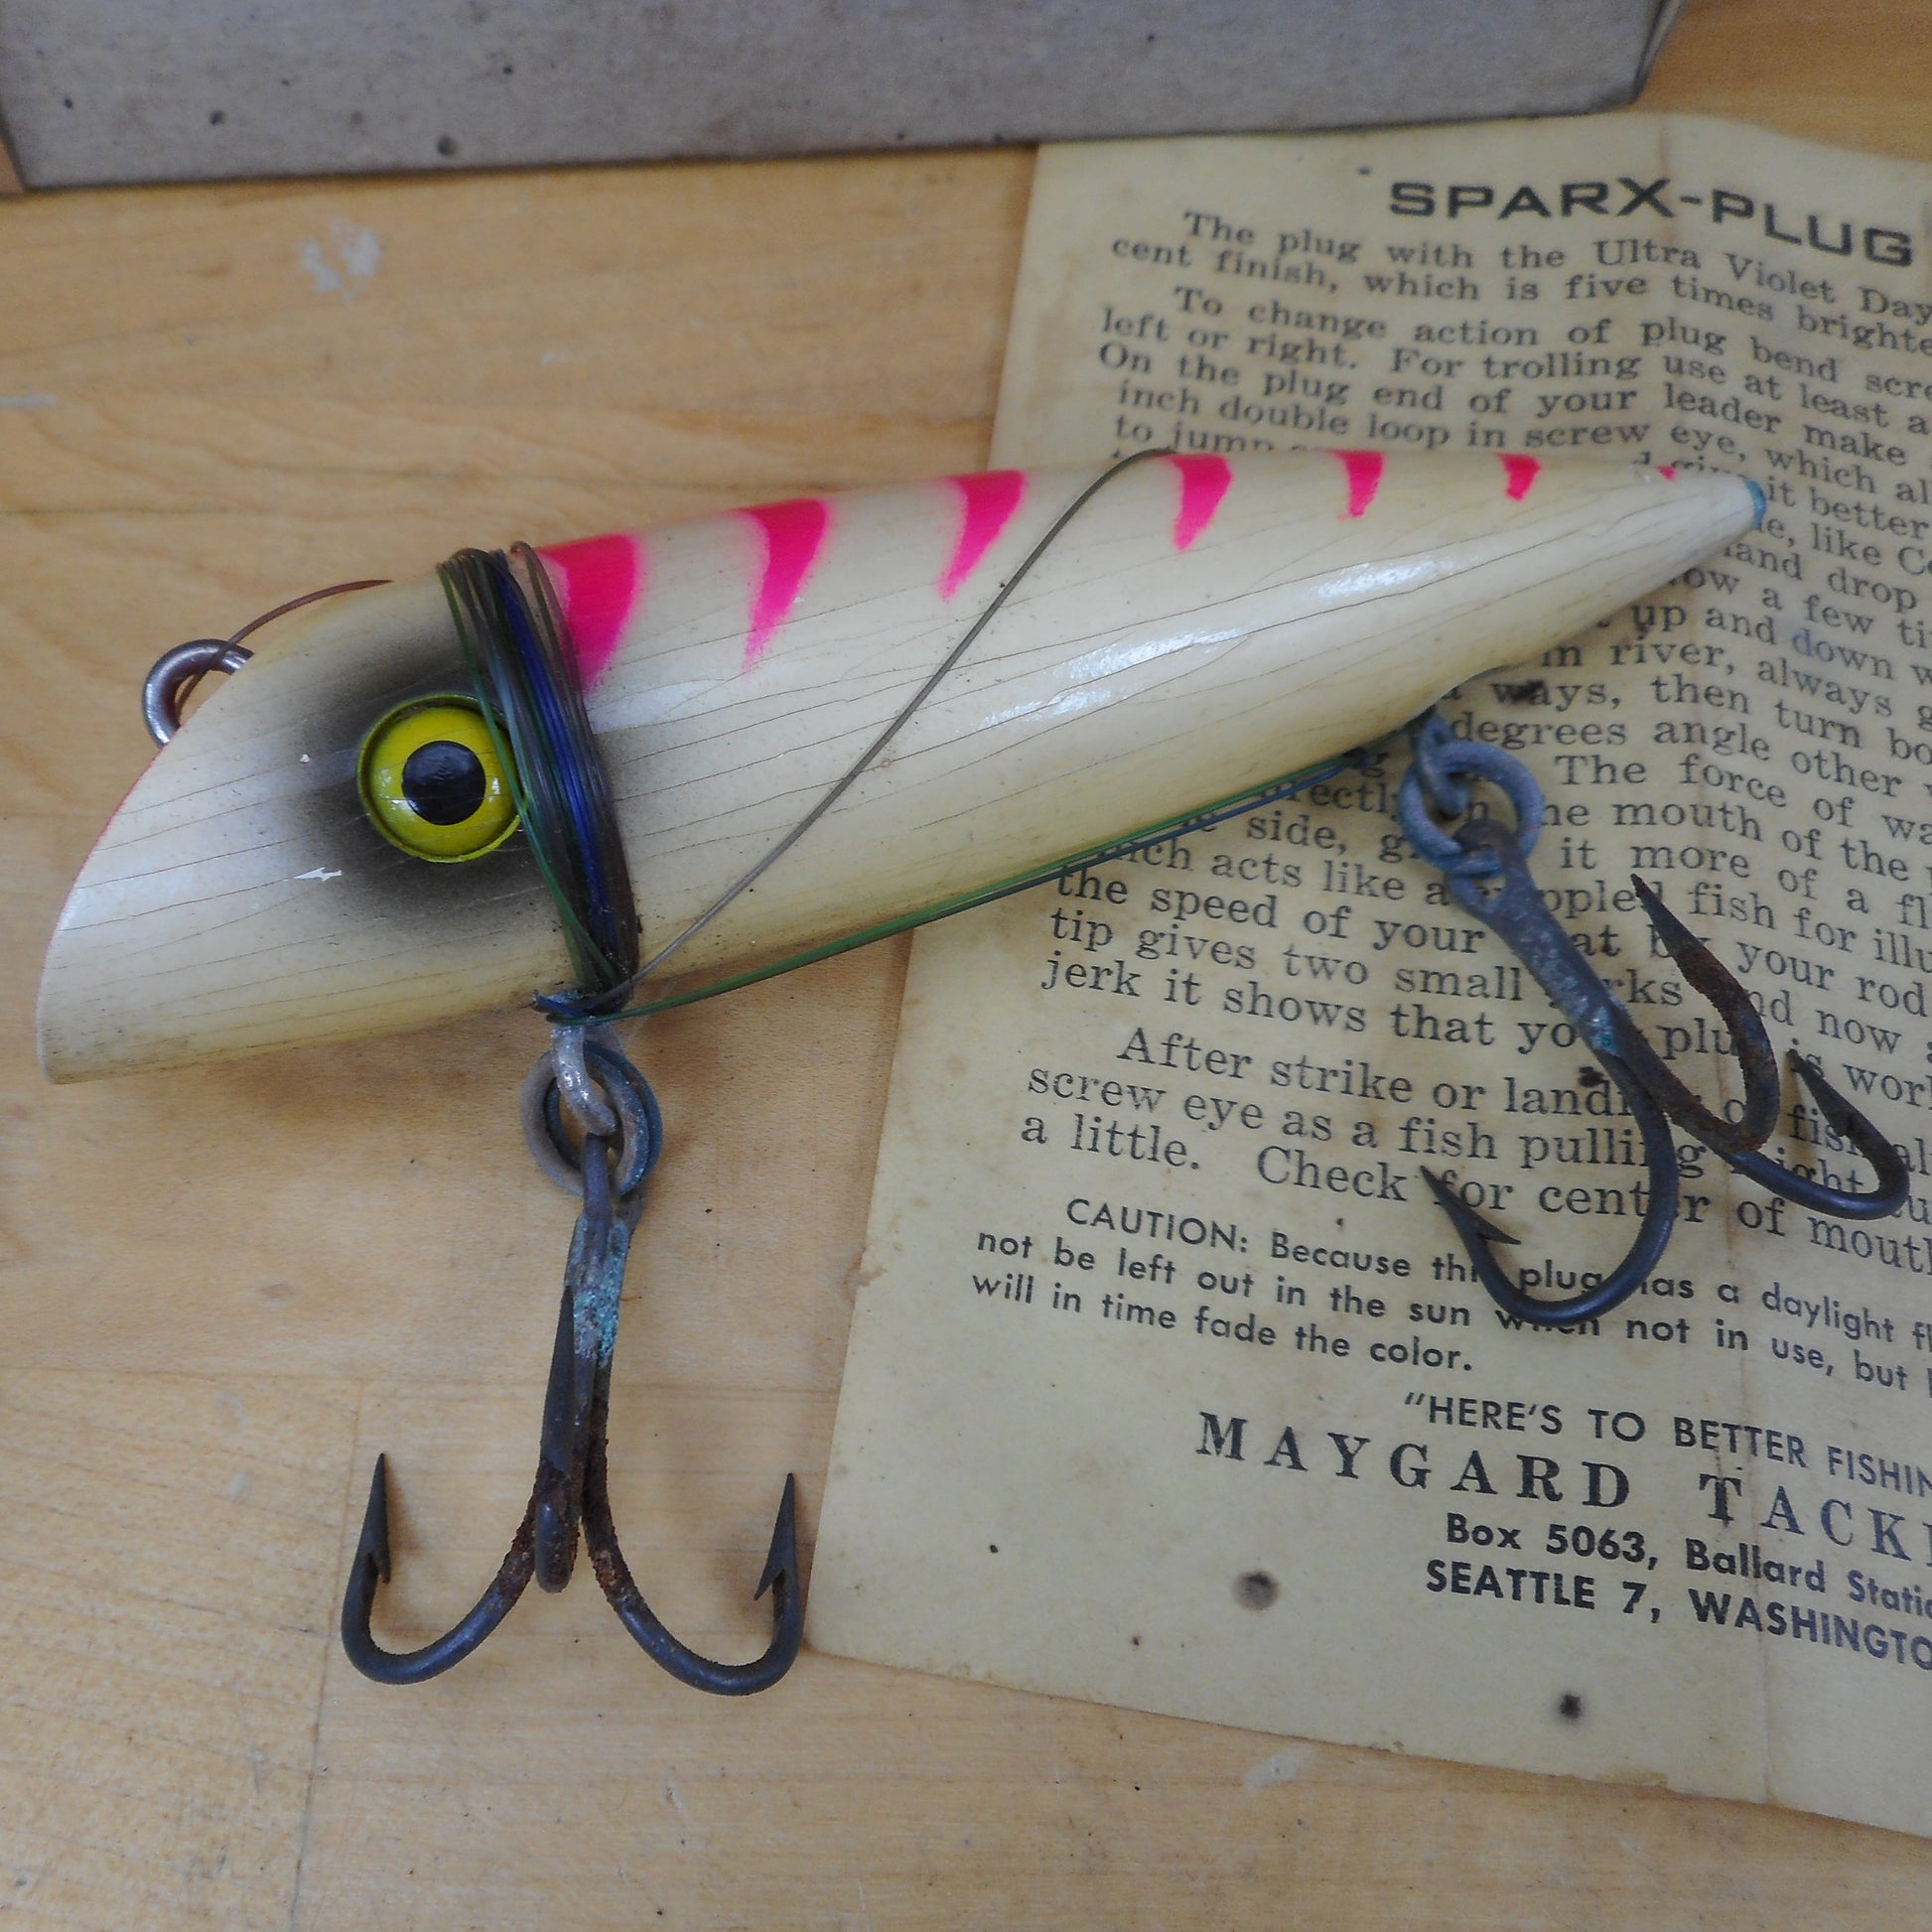 Maygard SparX-Plug Salmon Wood Fishing Lure Plug - Pearl Pink Skeleton with Box